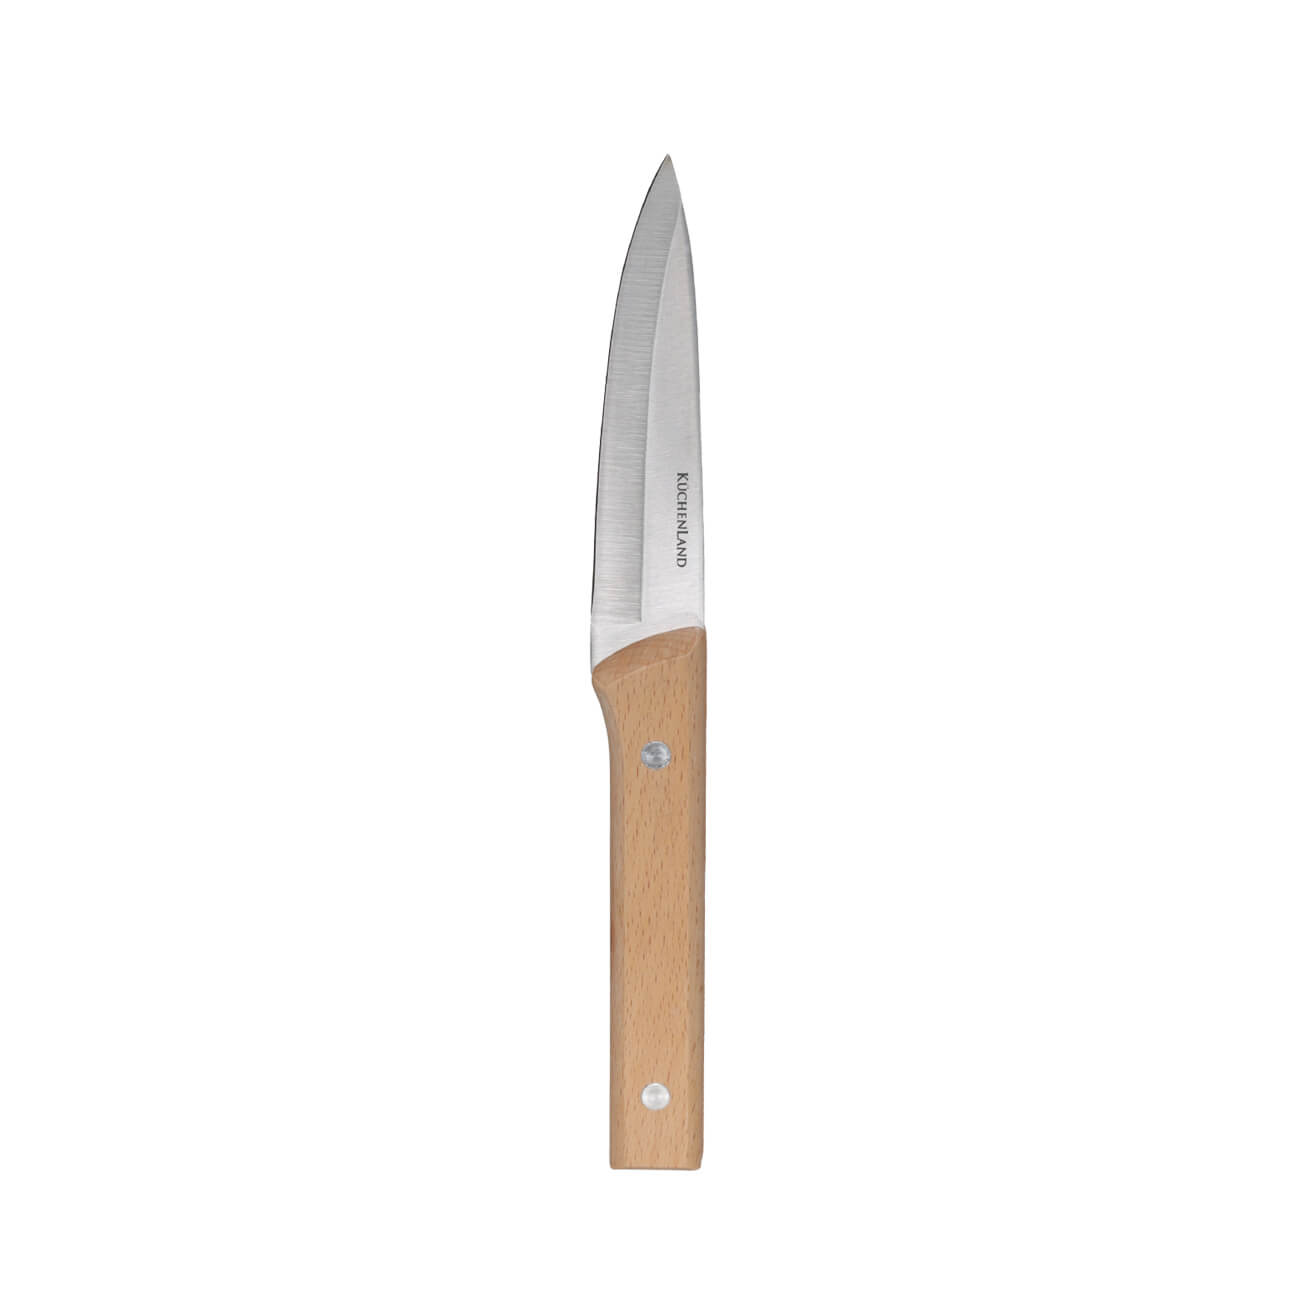 Нож для чистки овощей, 9 см, сталь/дерево, Eco home нож для чистки овощей comfort k1298114